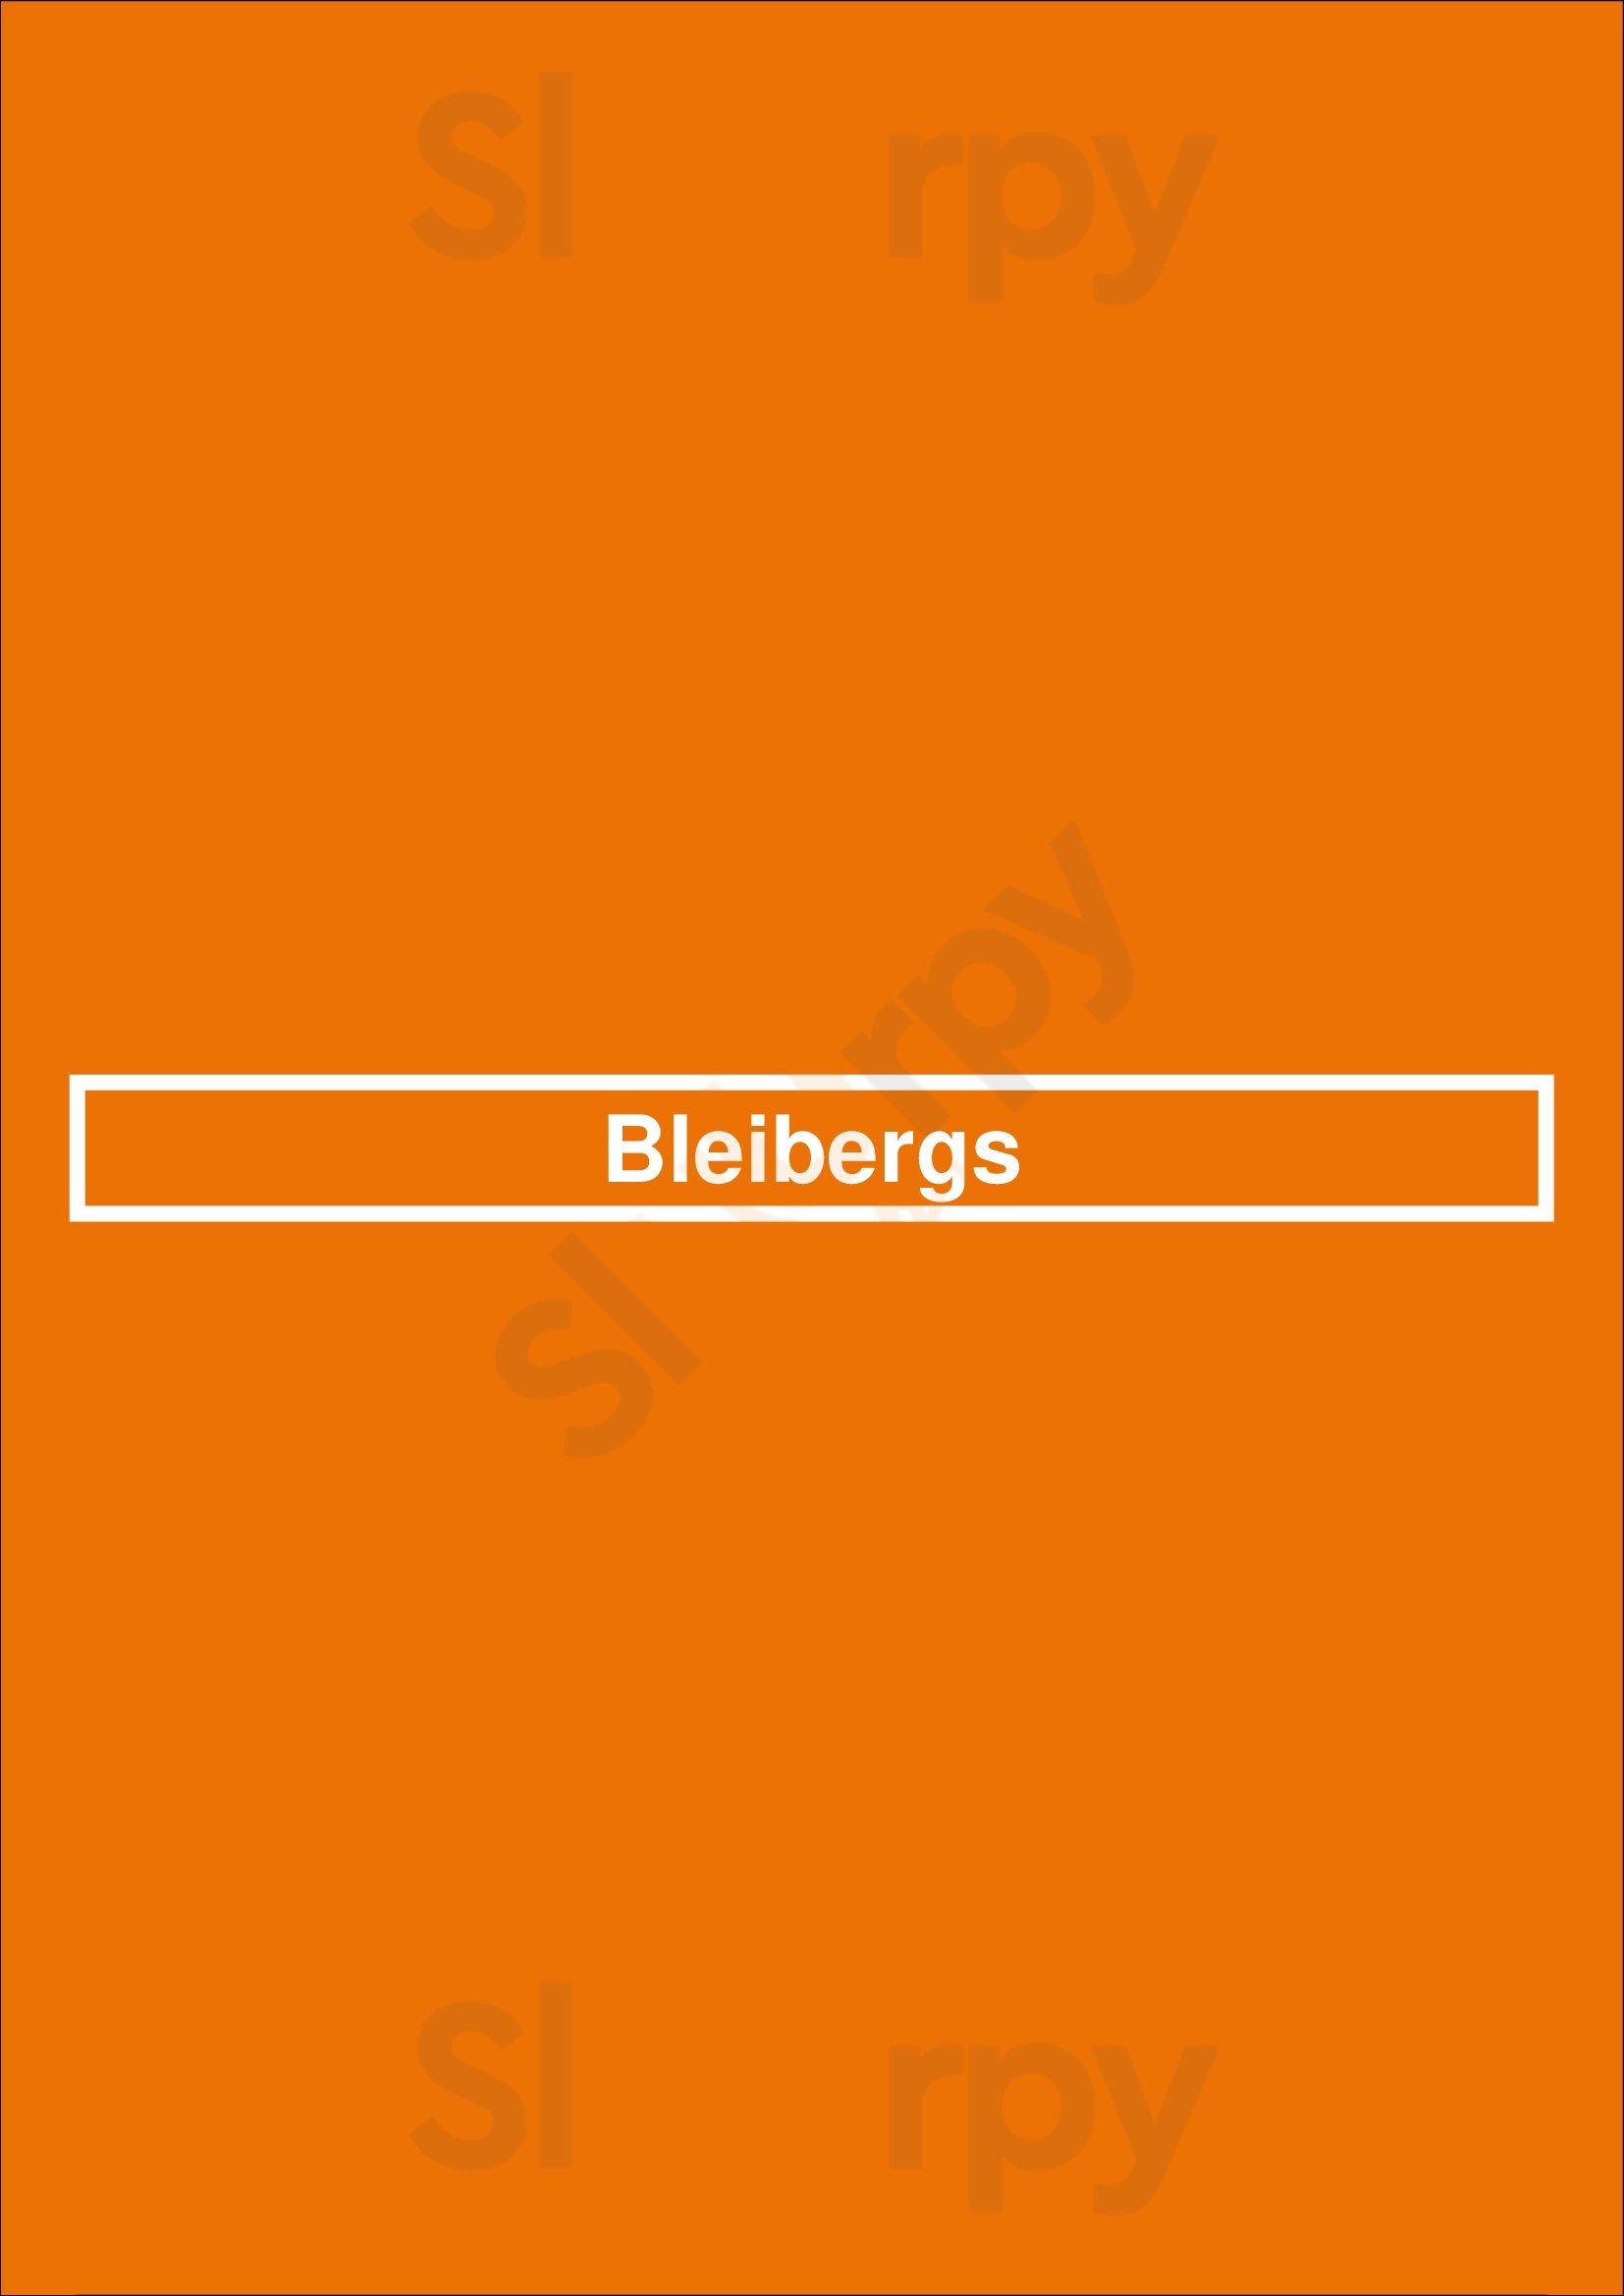 Bleibergs Berlin Menu - 1